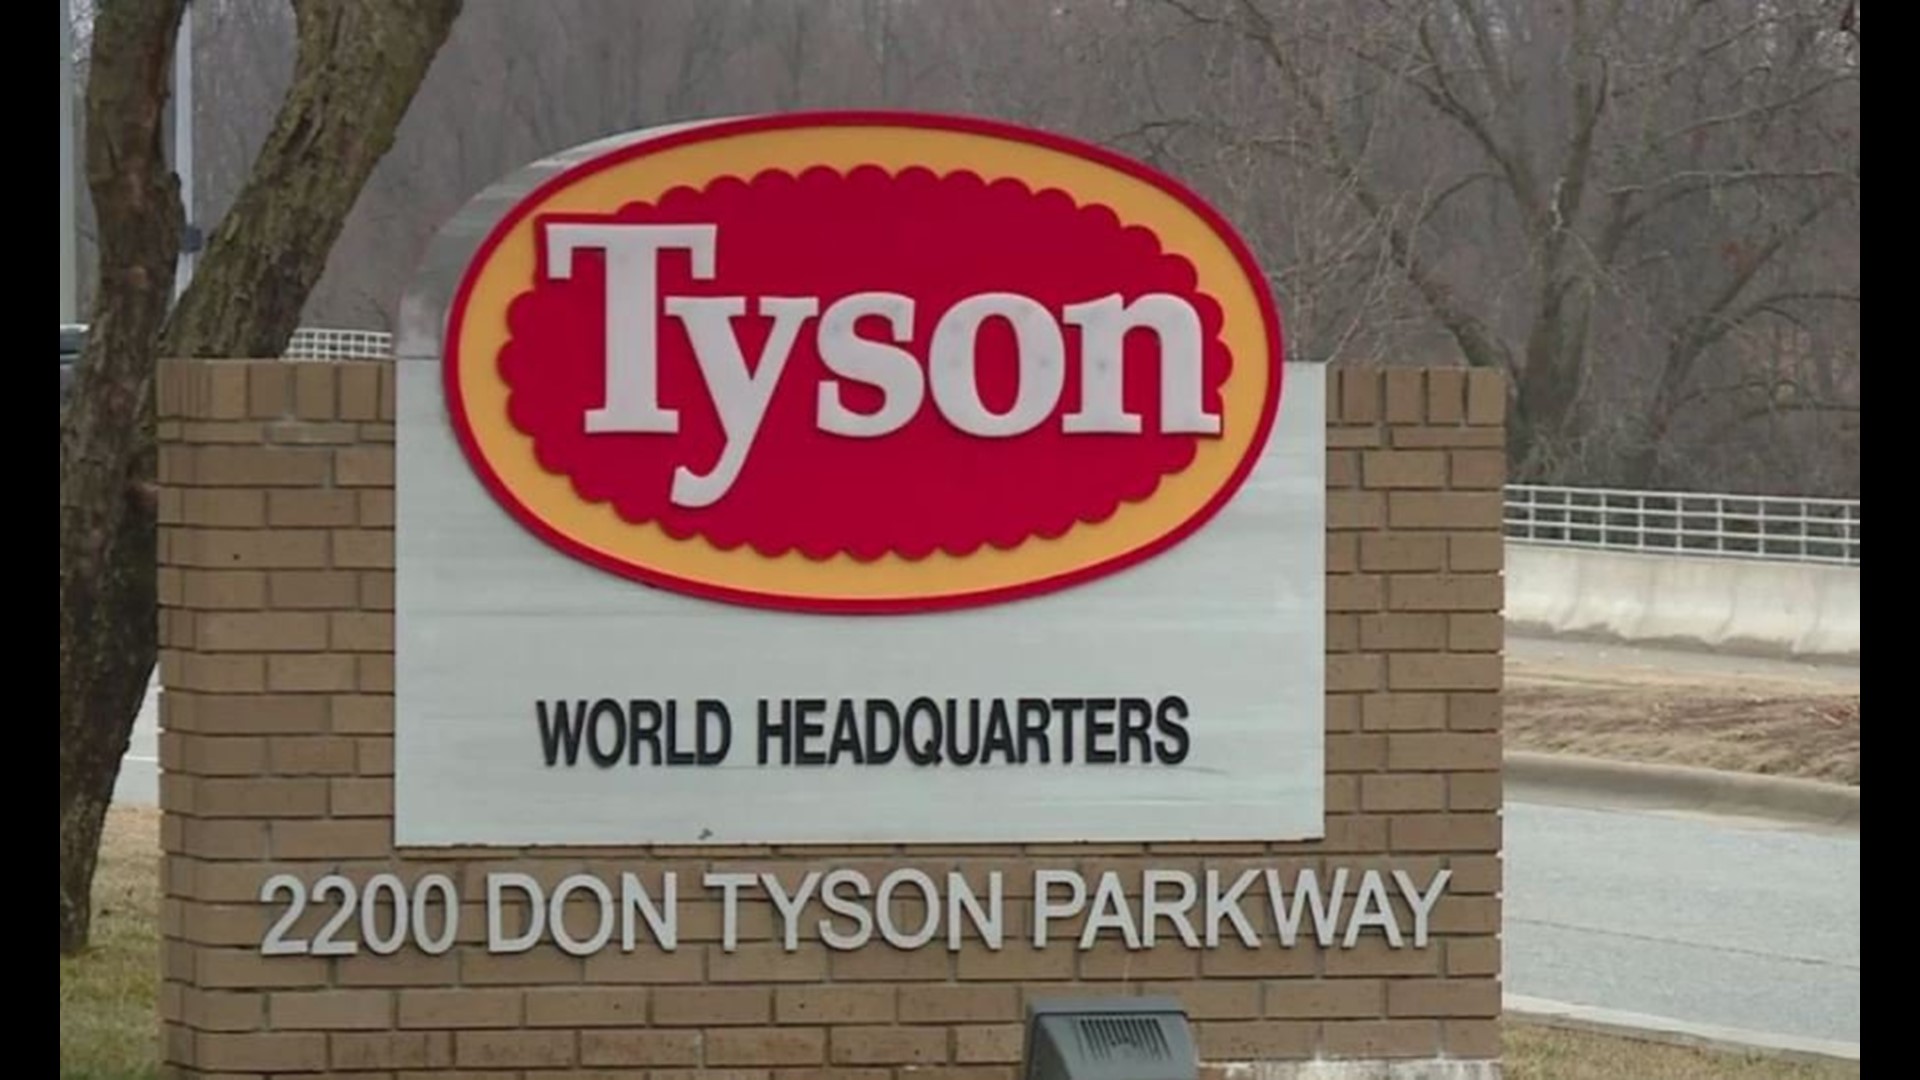 More Than 100 Layoffs Announced At Tyson Plant In Van Buren